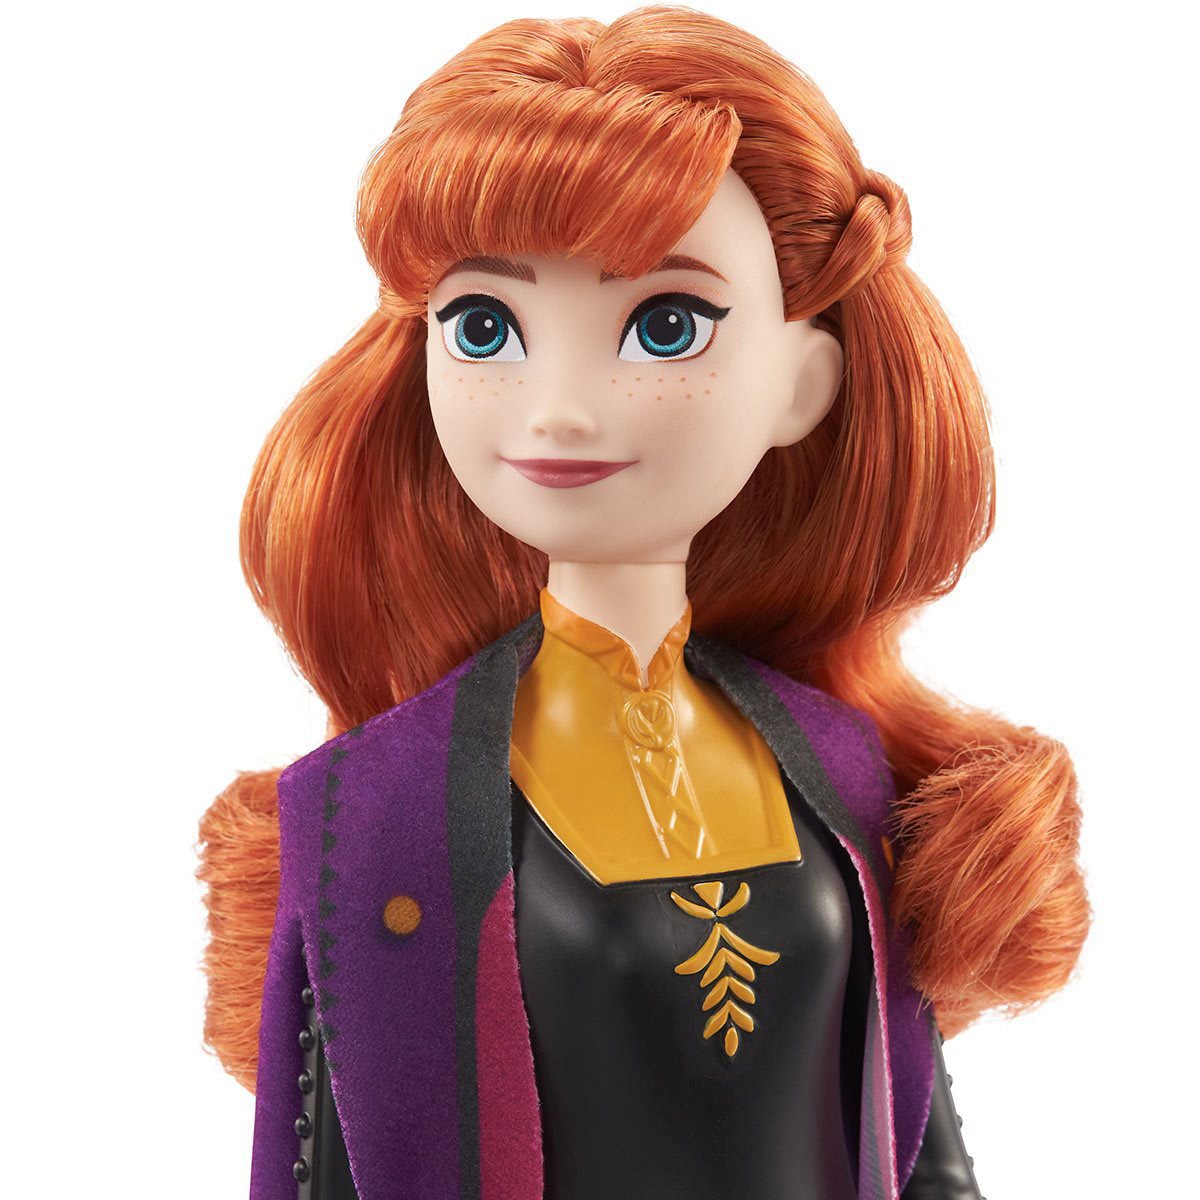 Disney Frozen 2 Anna Doll - Entertainment Earth